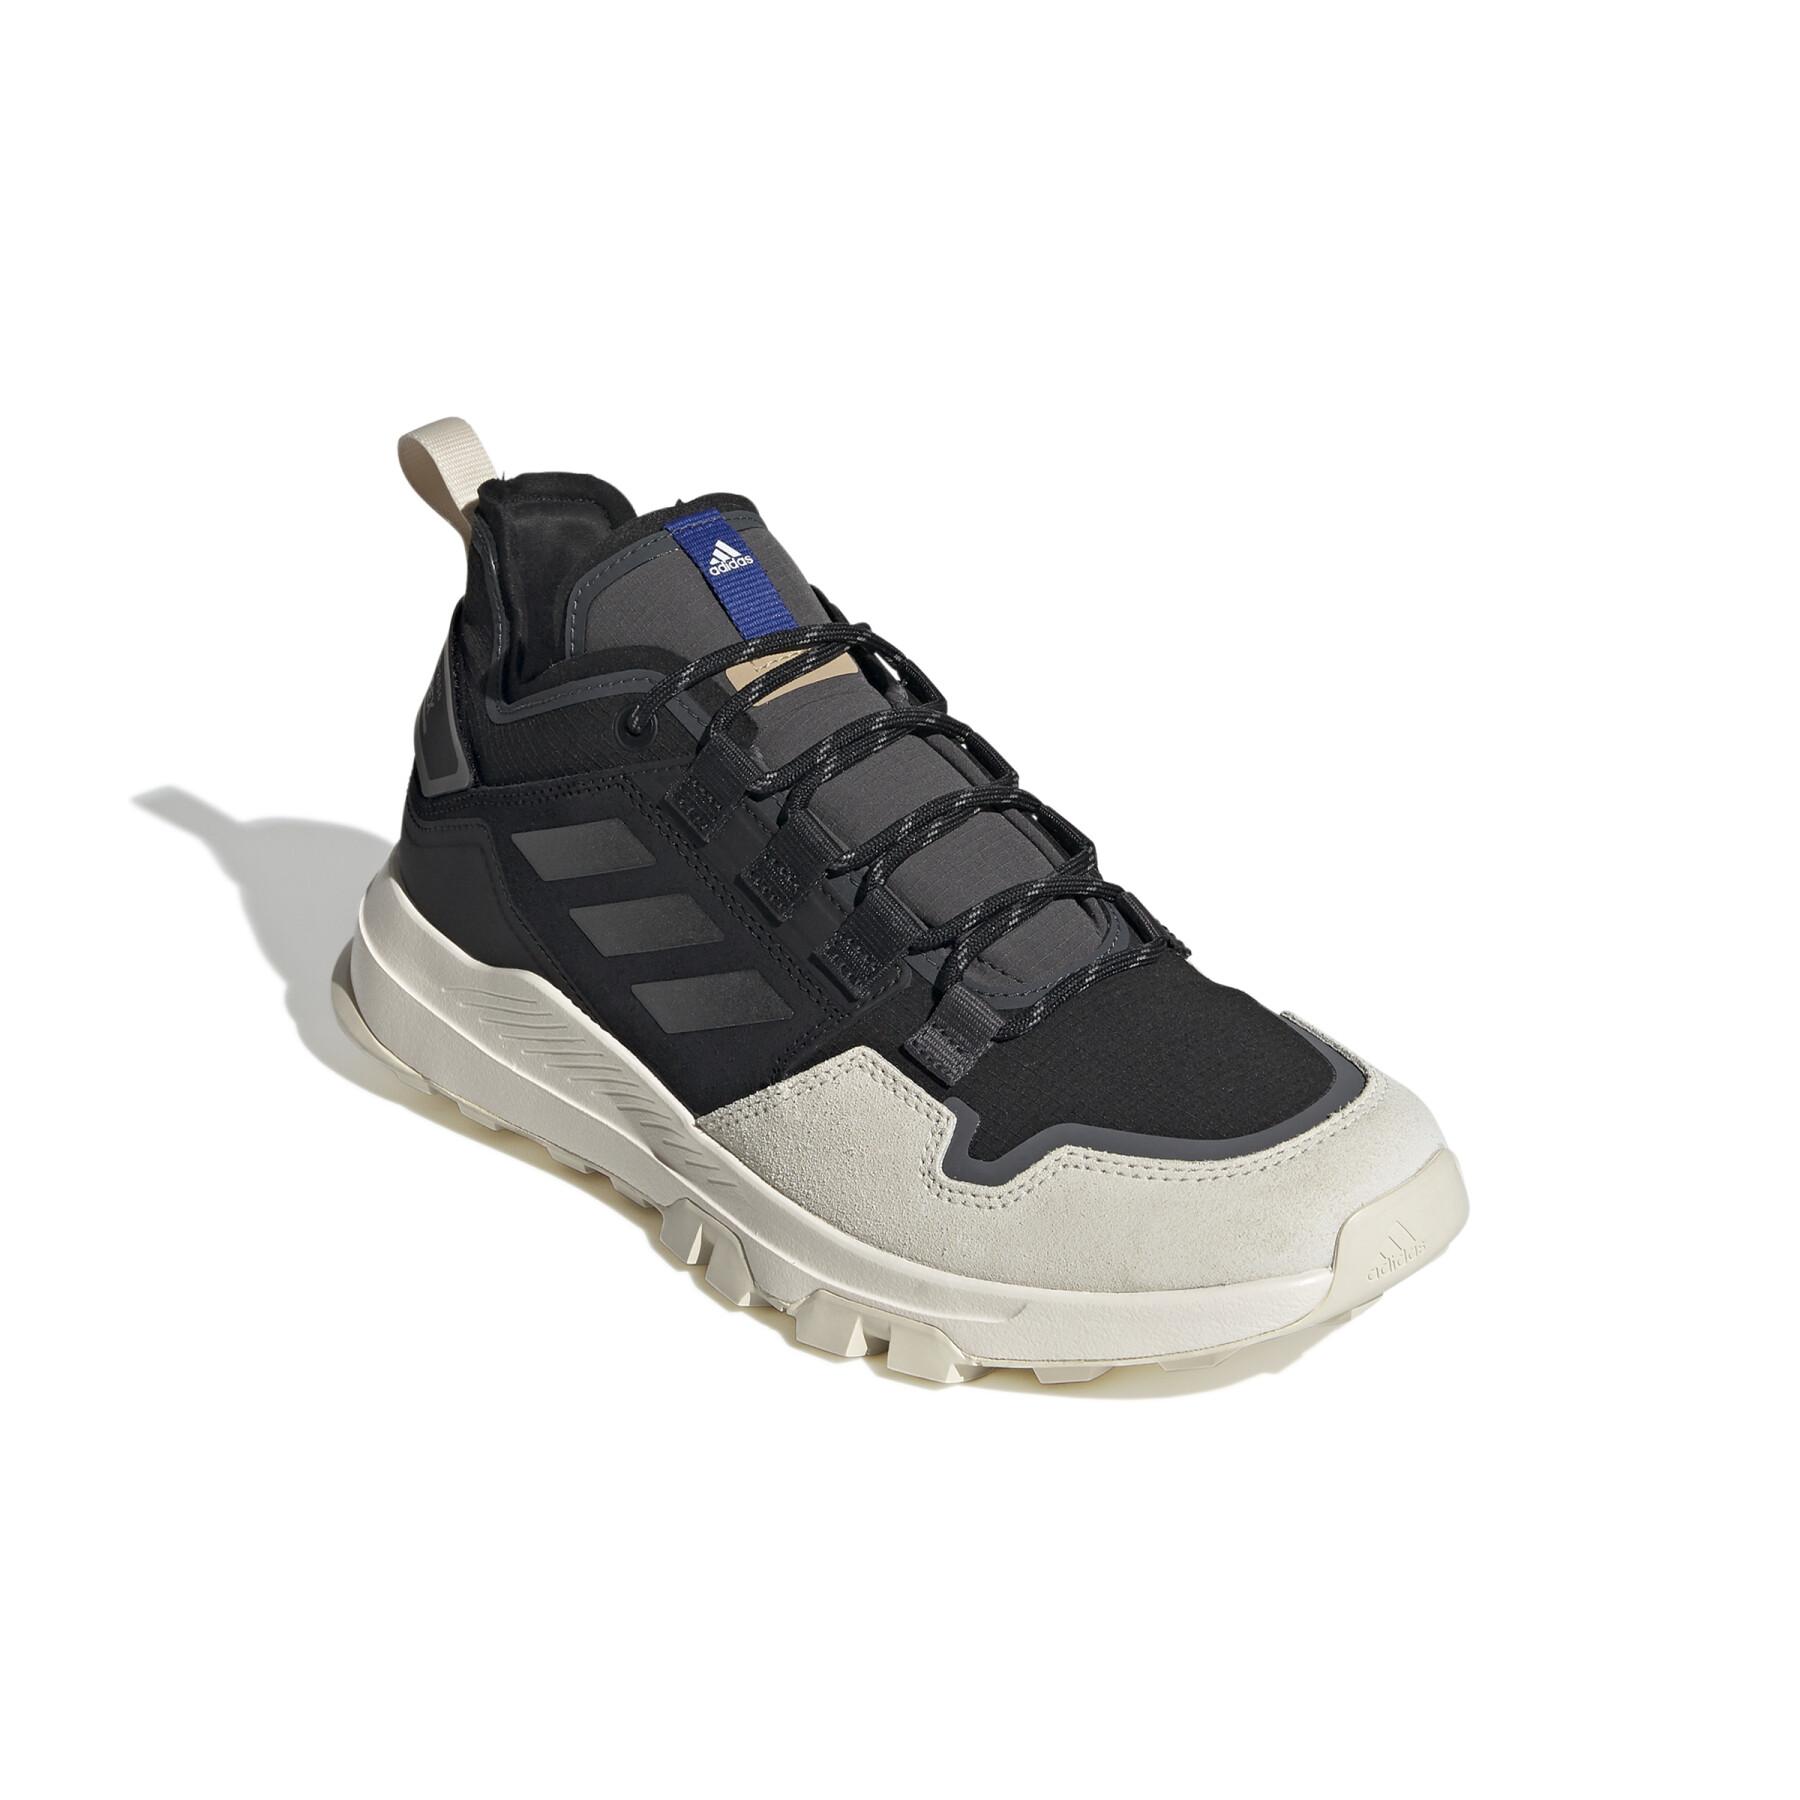 Hiking shoes adidas Terrex Low